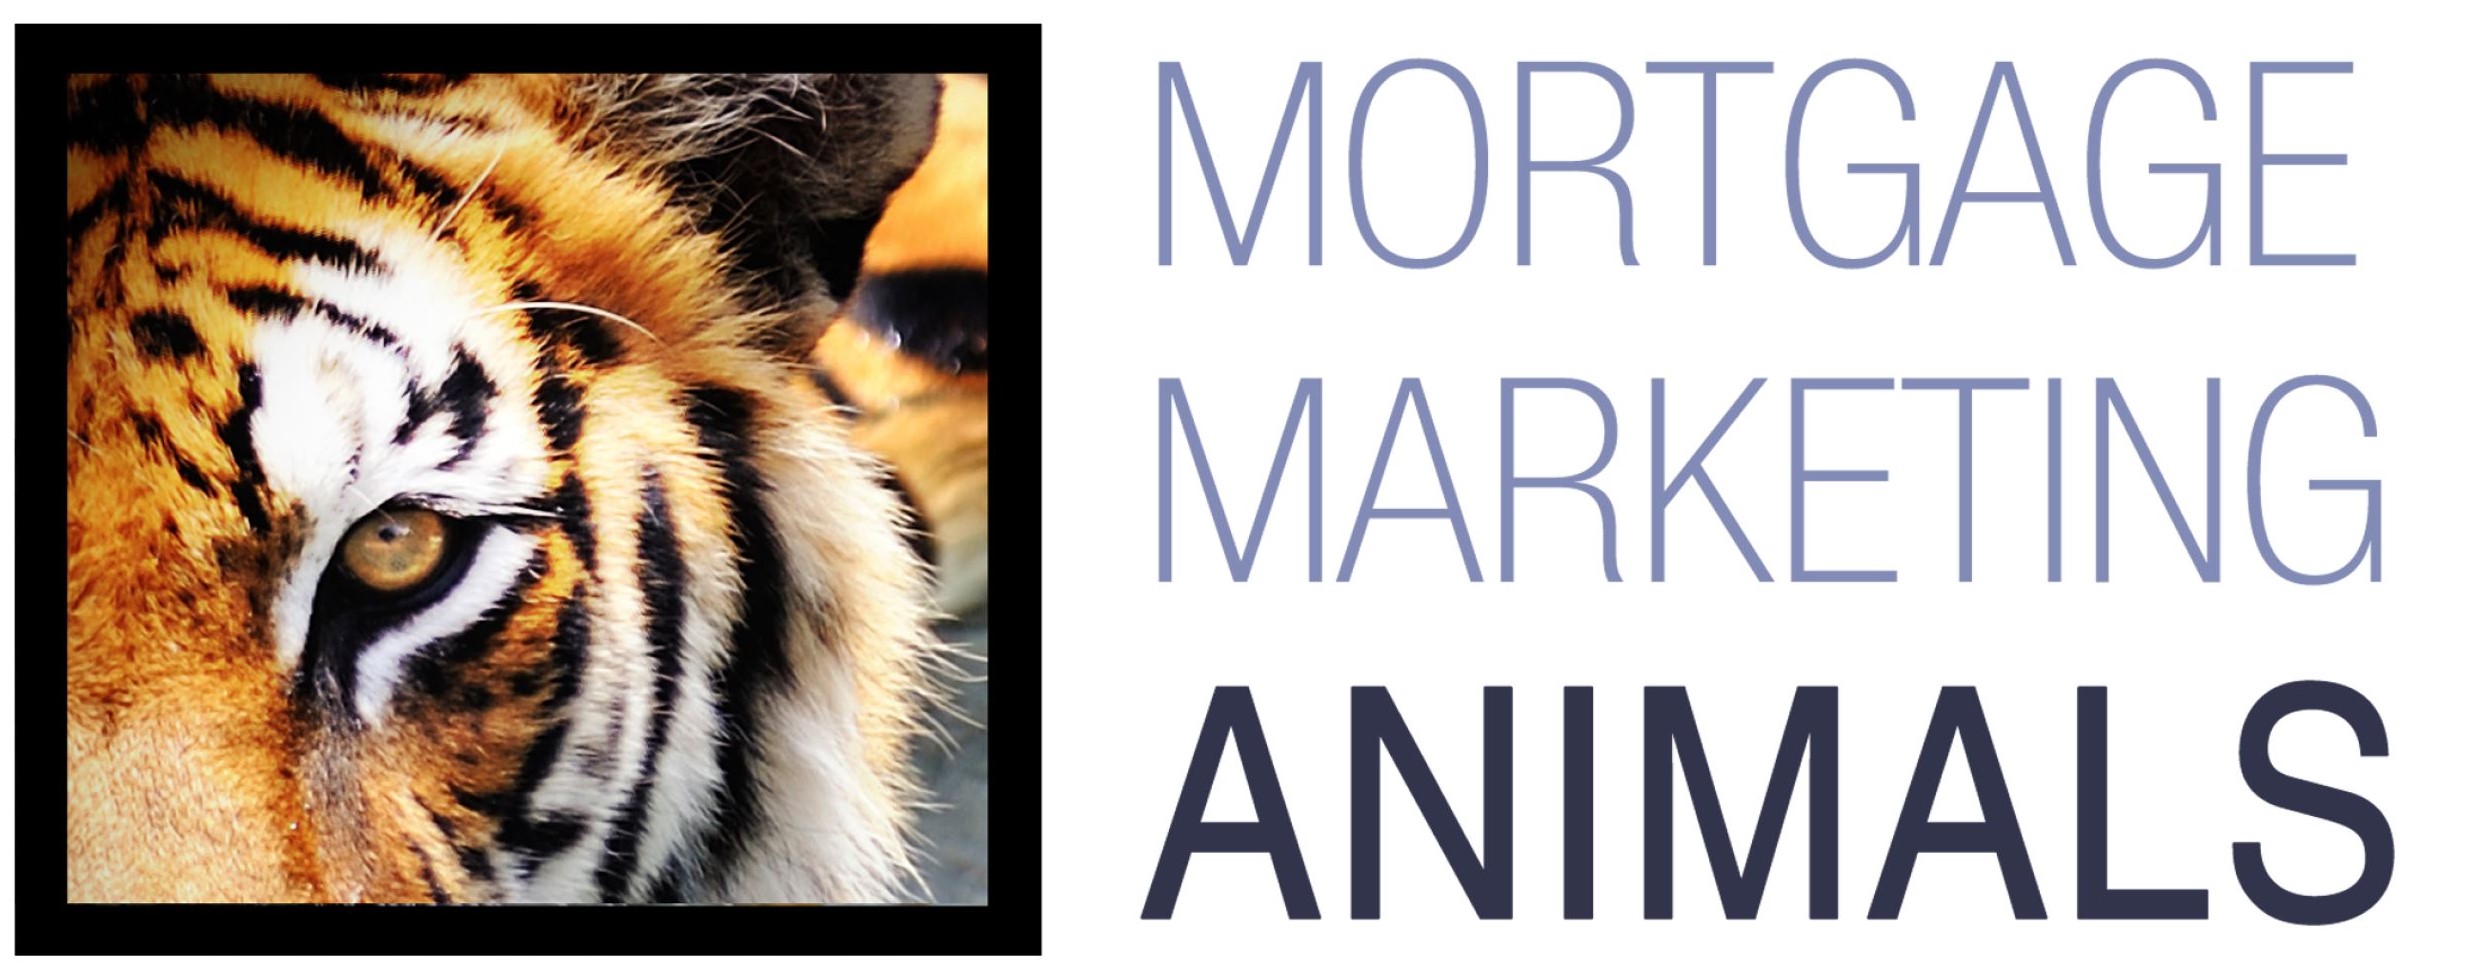 Mortgage Marketing Animals logo